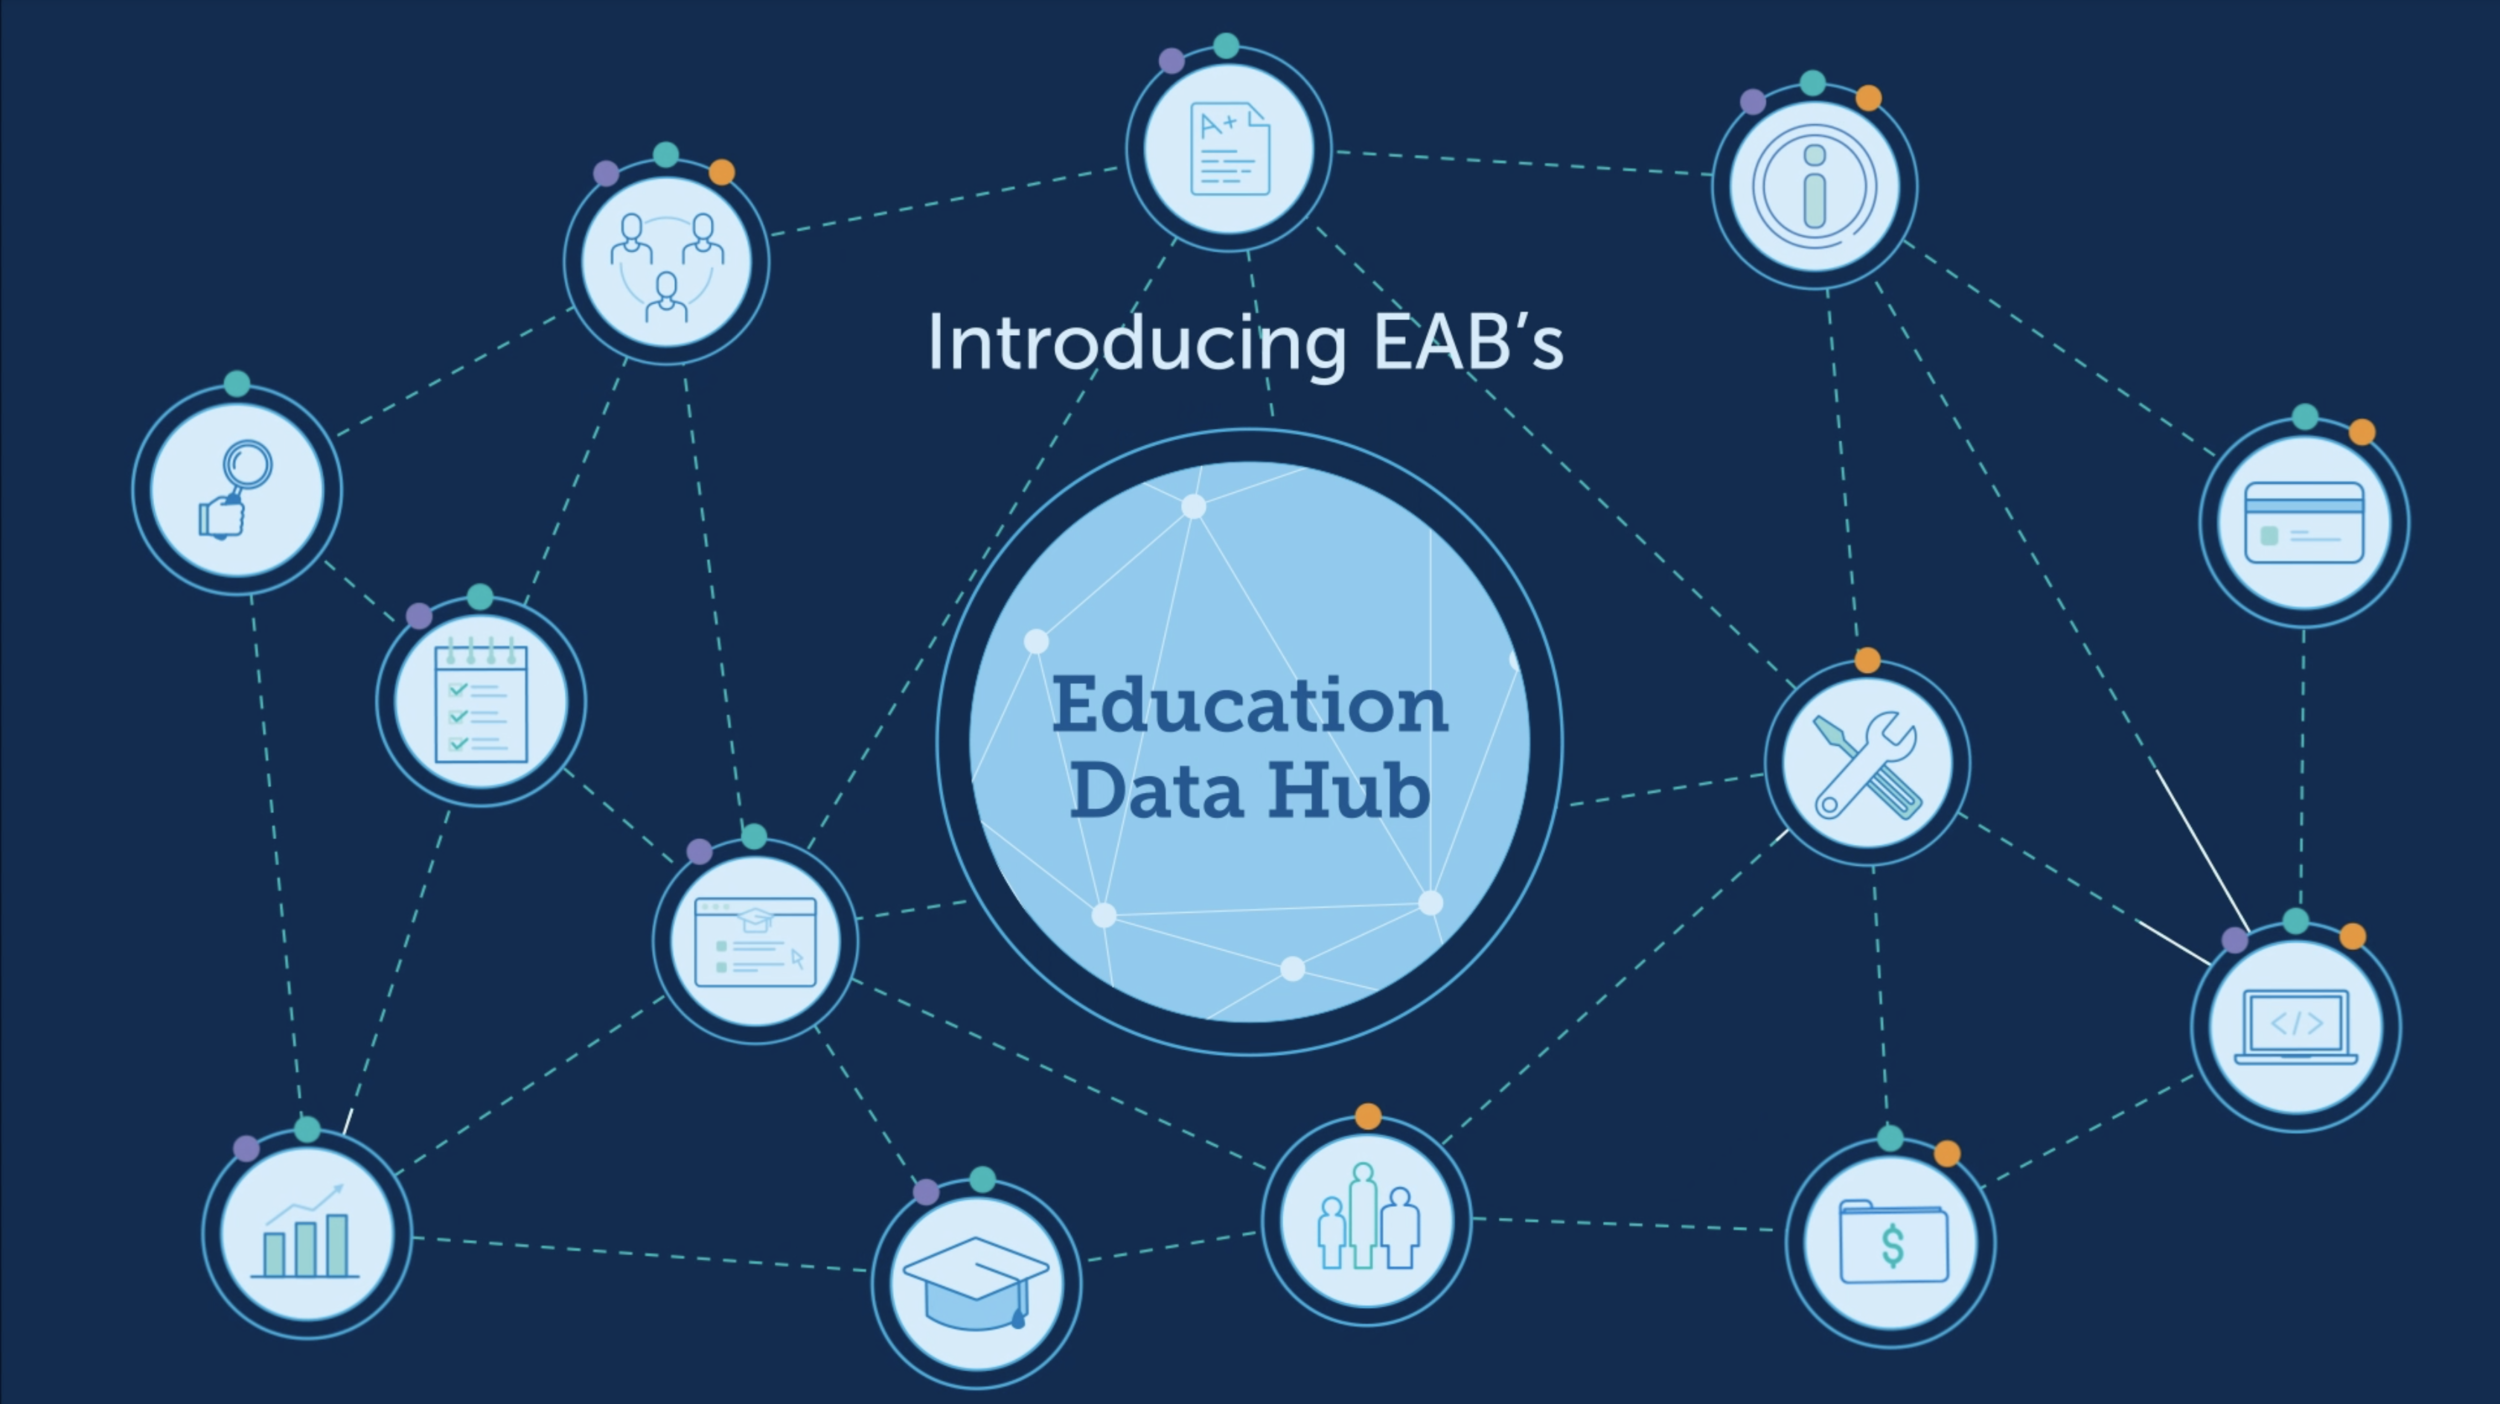 Education Data Hub